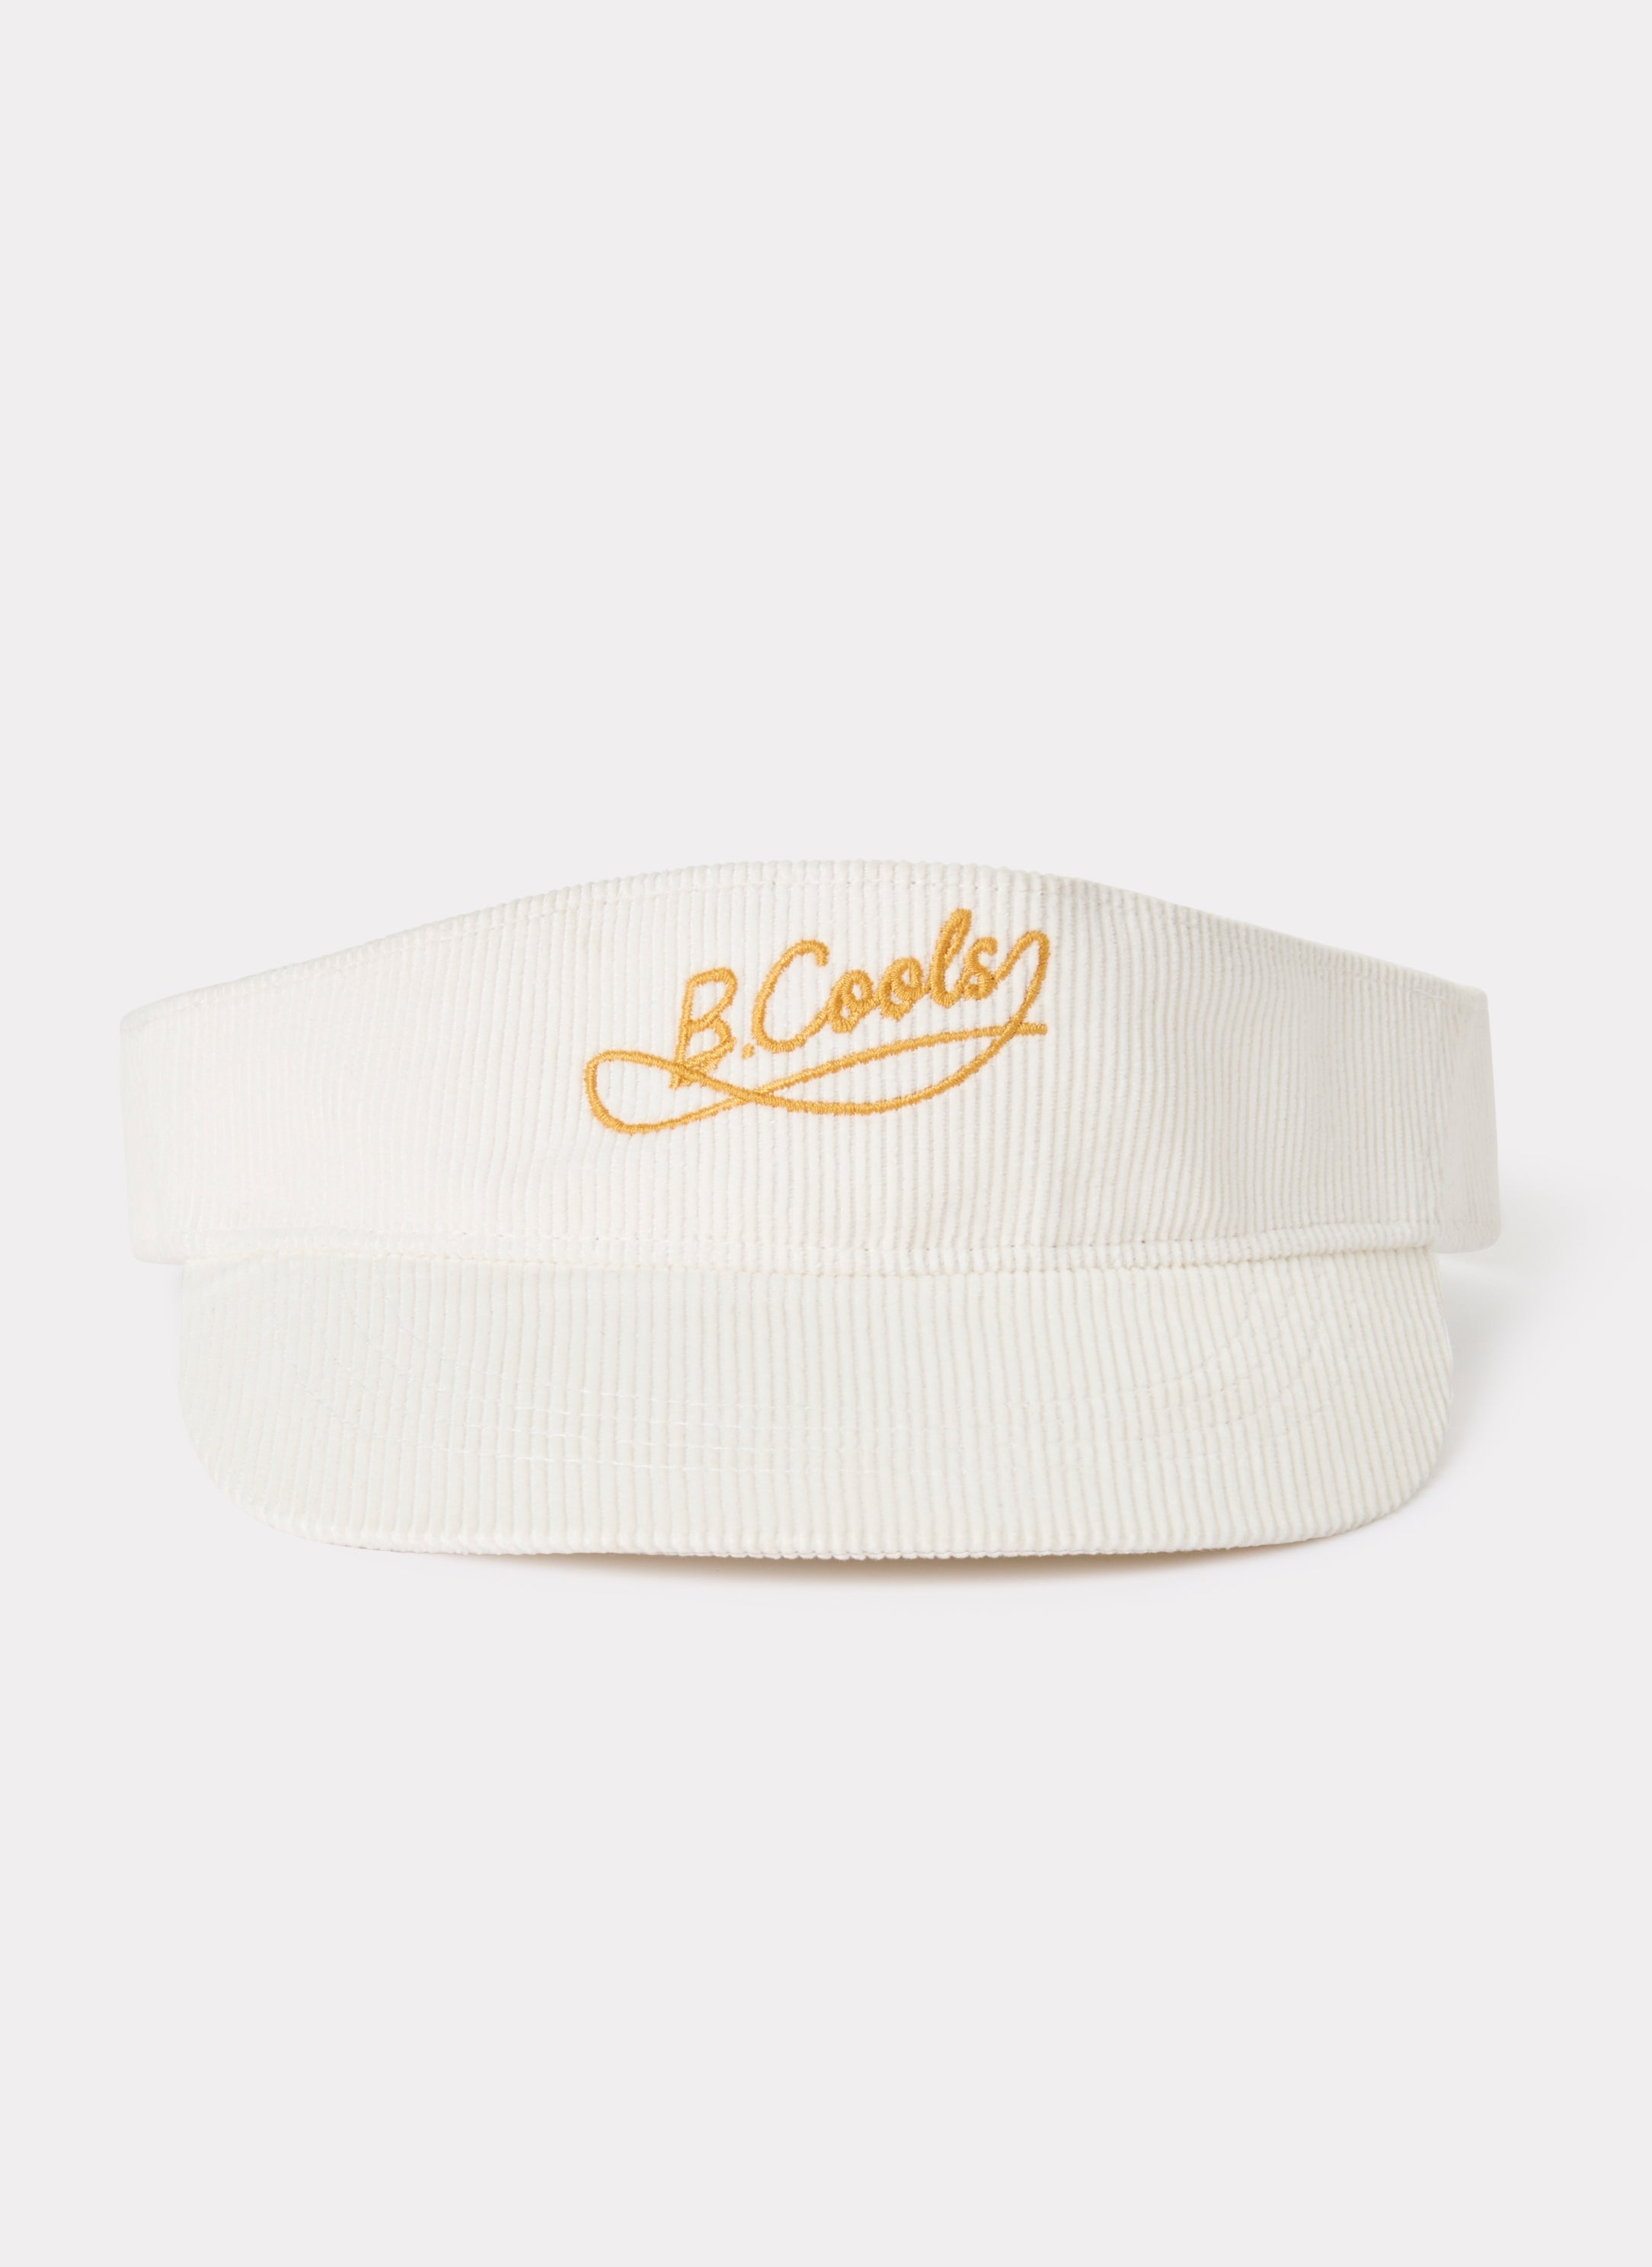 barney cools golf visor - white cord